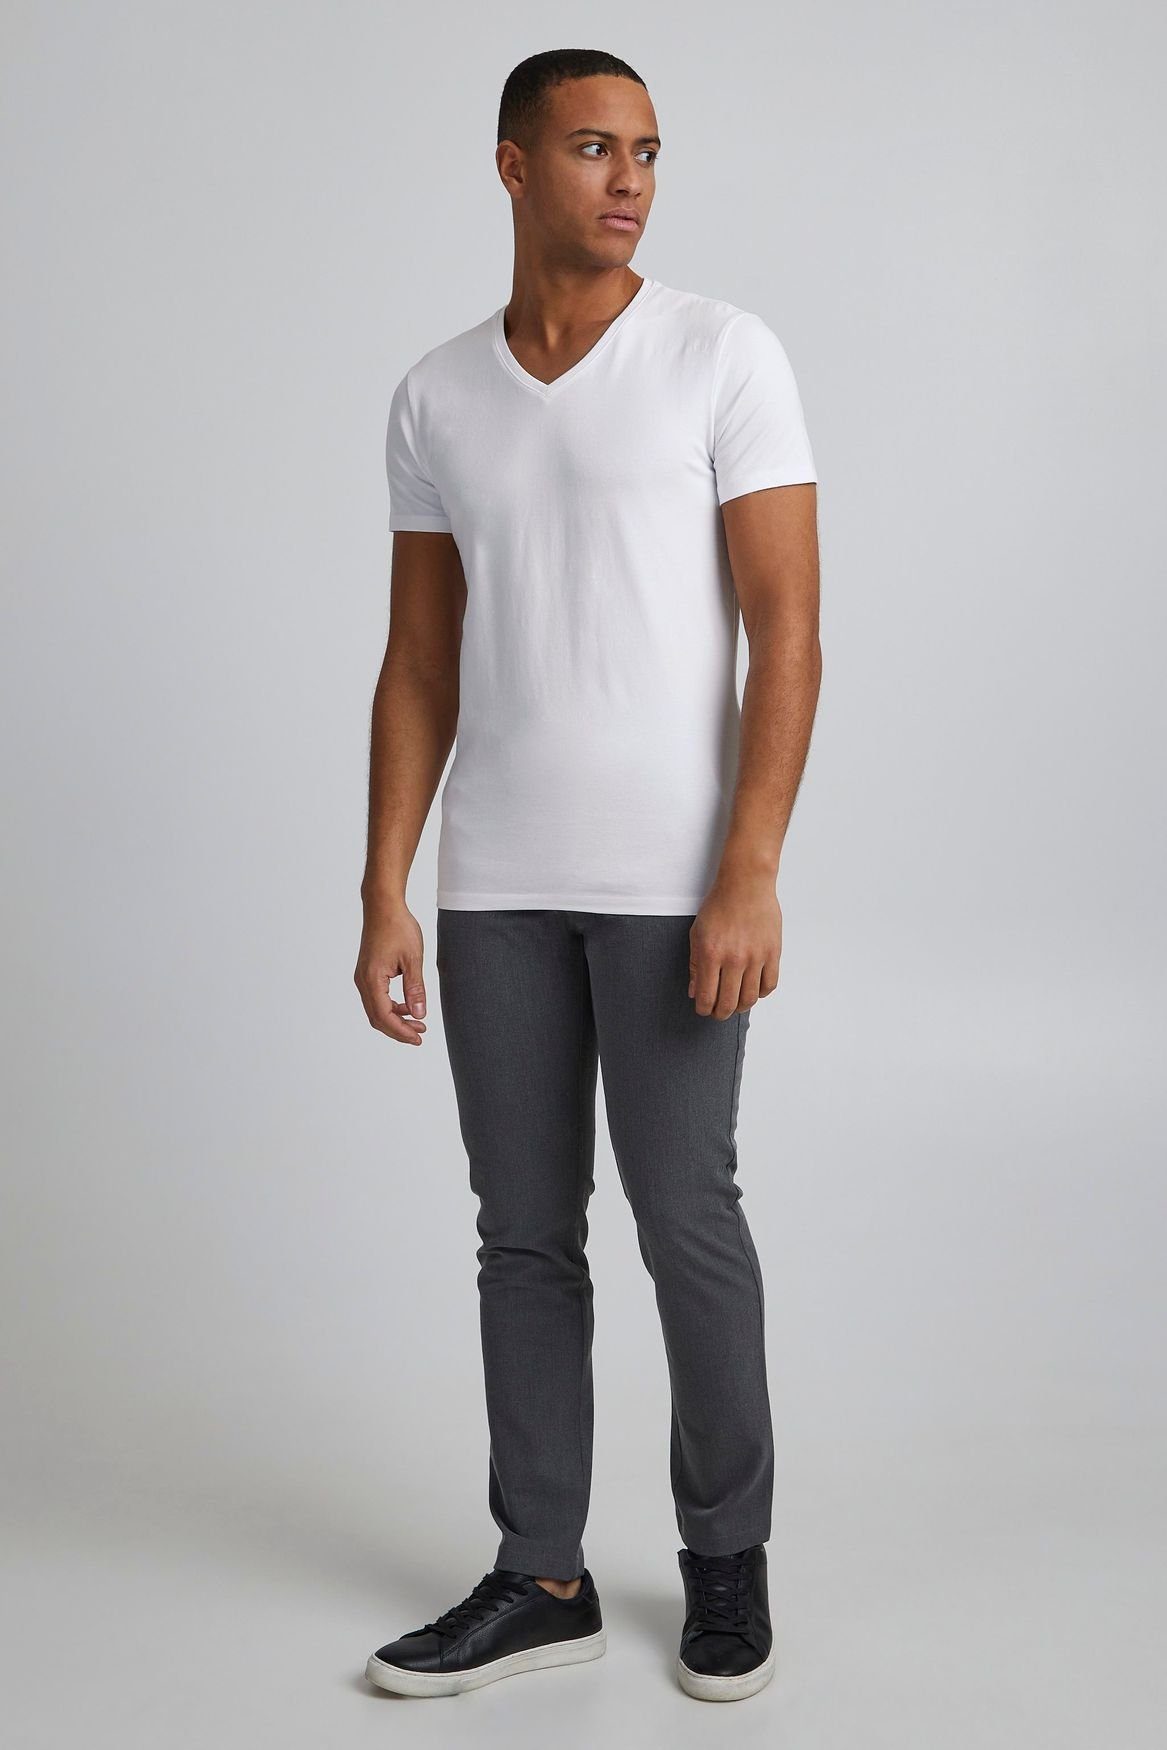 T-Shirt in Casual Friday V-Ausschnitt T-Shirt Weiß LINCOLN Einfarbiges 4458 Kurzarm Basic